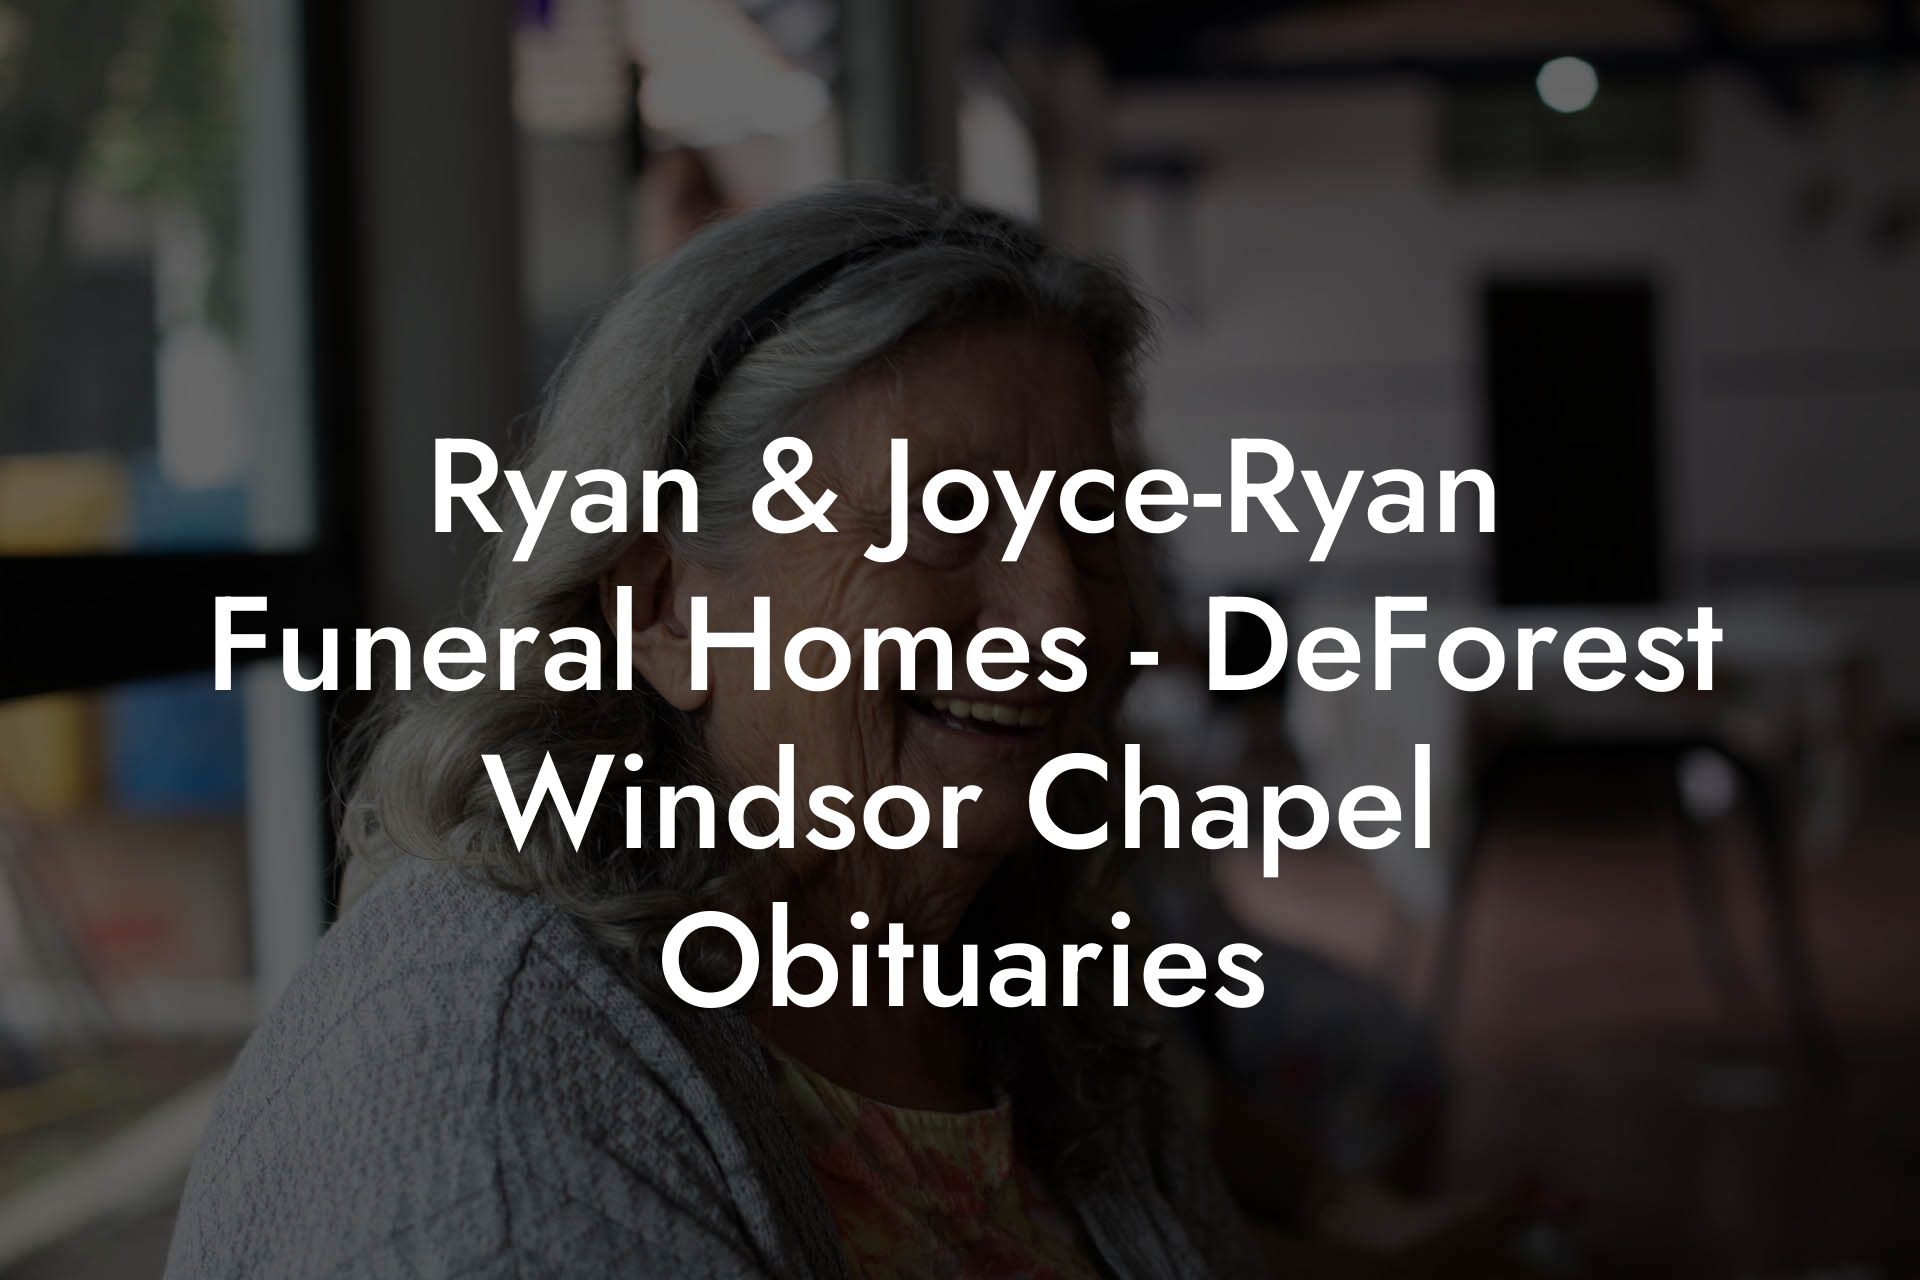 Ryan & Joyce-Ryan Funeral Homes - DeForest Windsor Chapel Obituaries